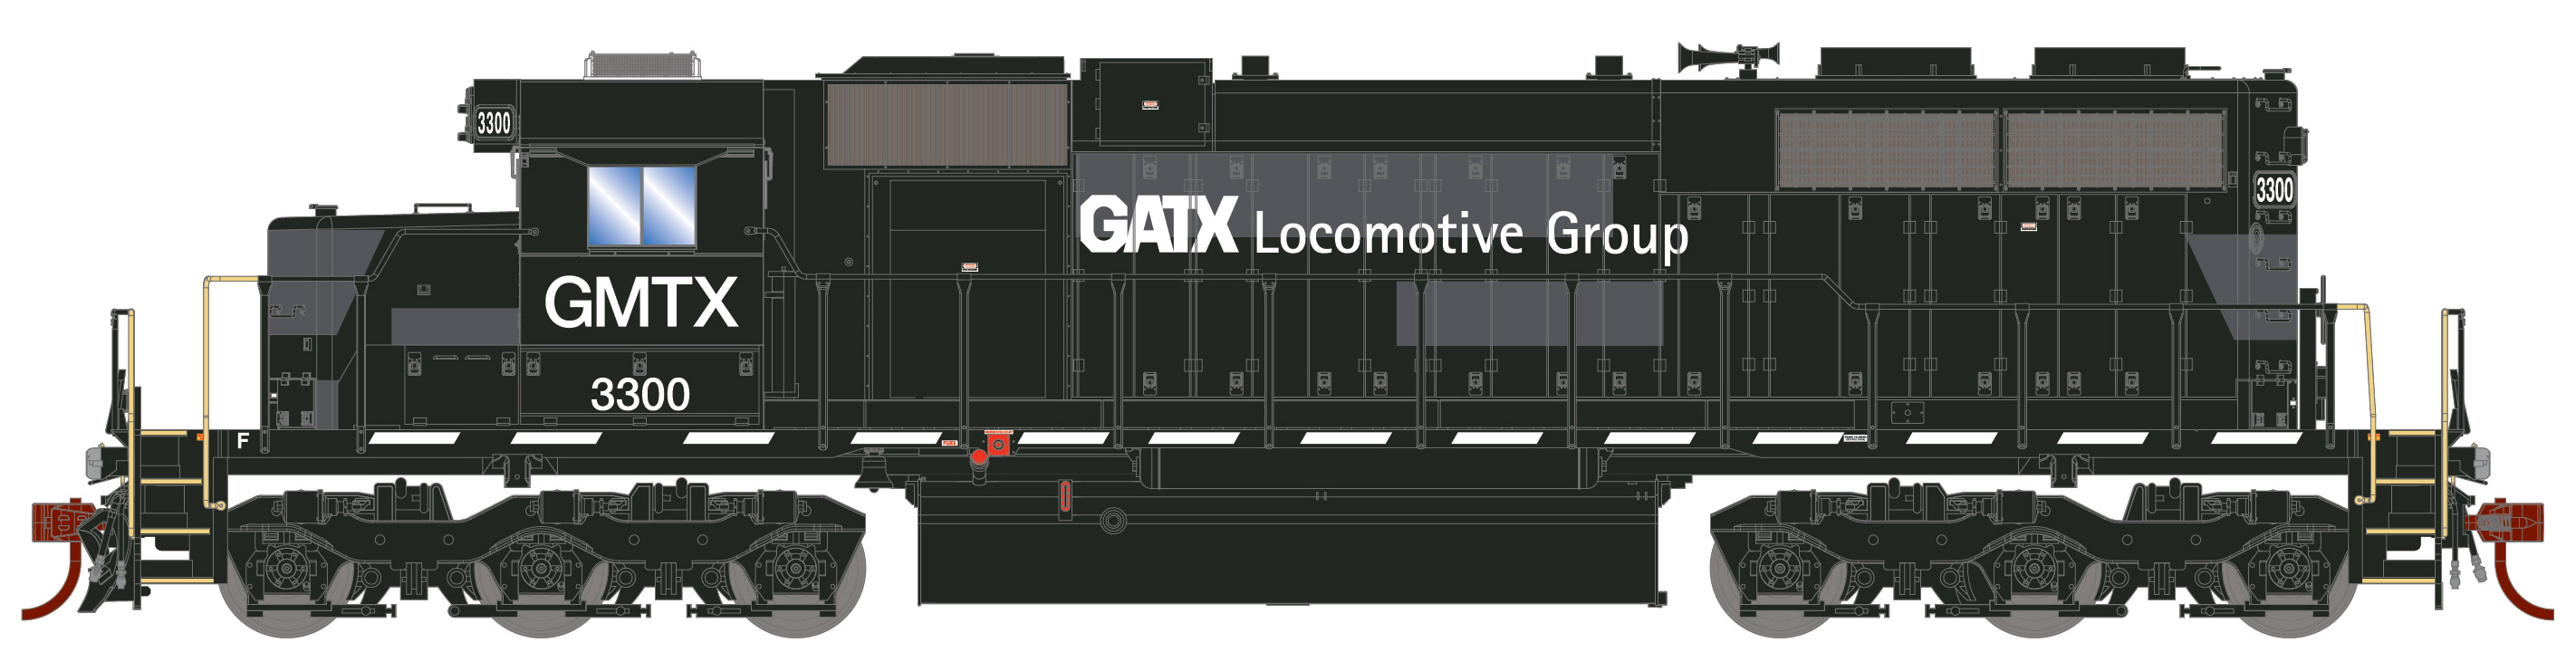 GMTX / GATX Locomotive Group